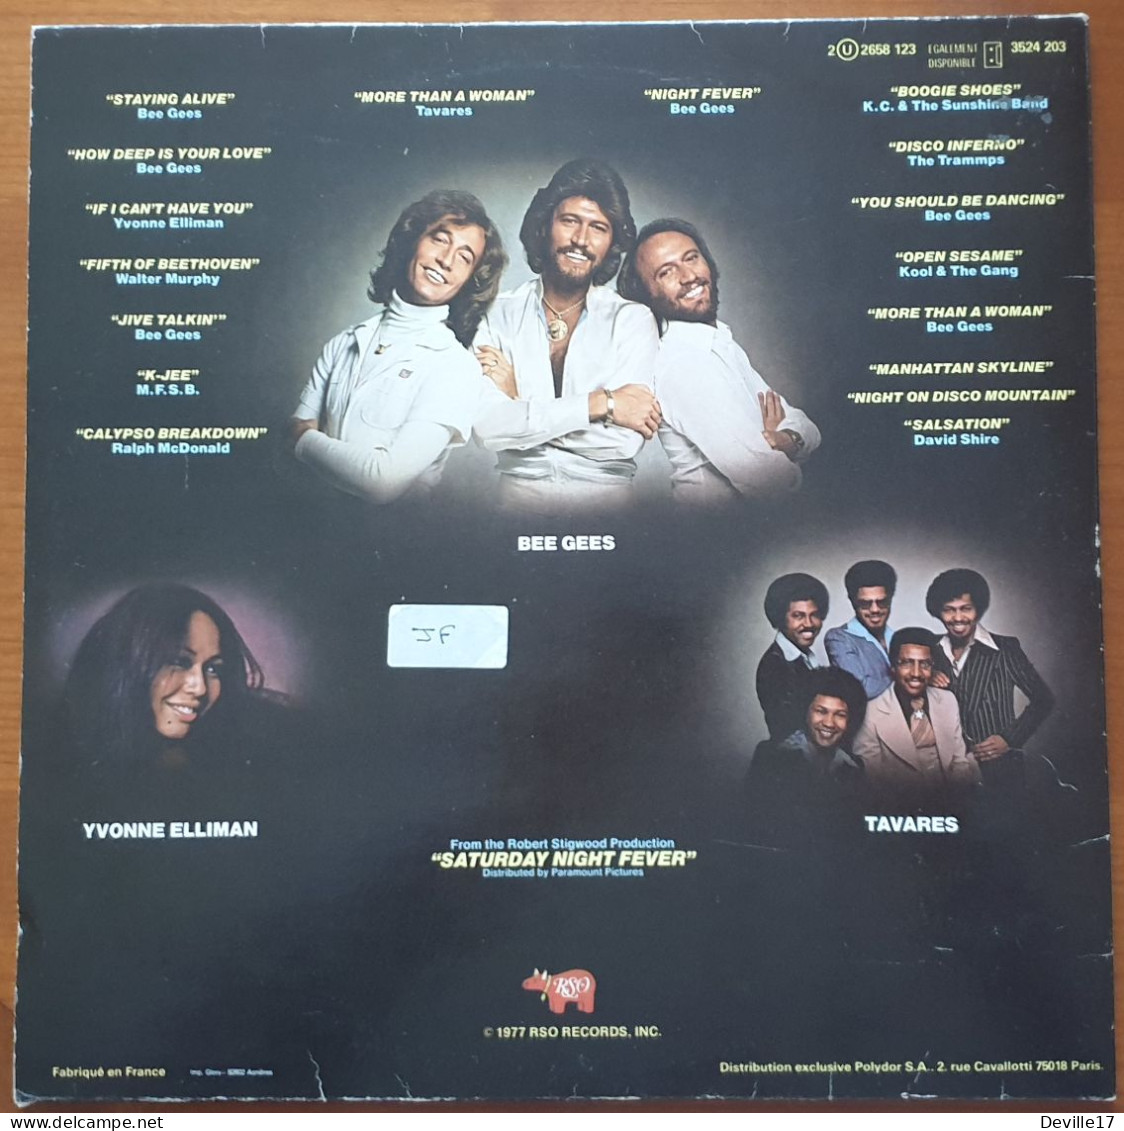 BEE GEES - DOUBLE ALBUM "SATURDAY NIGHT FEVER" - RSO RECORDS, INC - POLYDOR - 1977 - 2658 123 - Disco & Pop